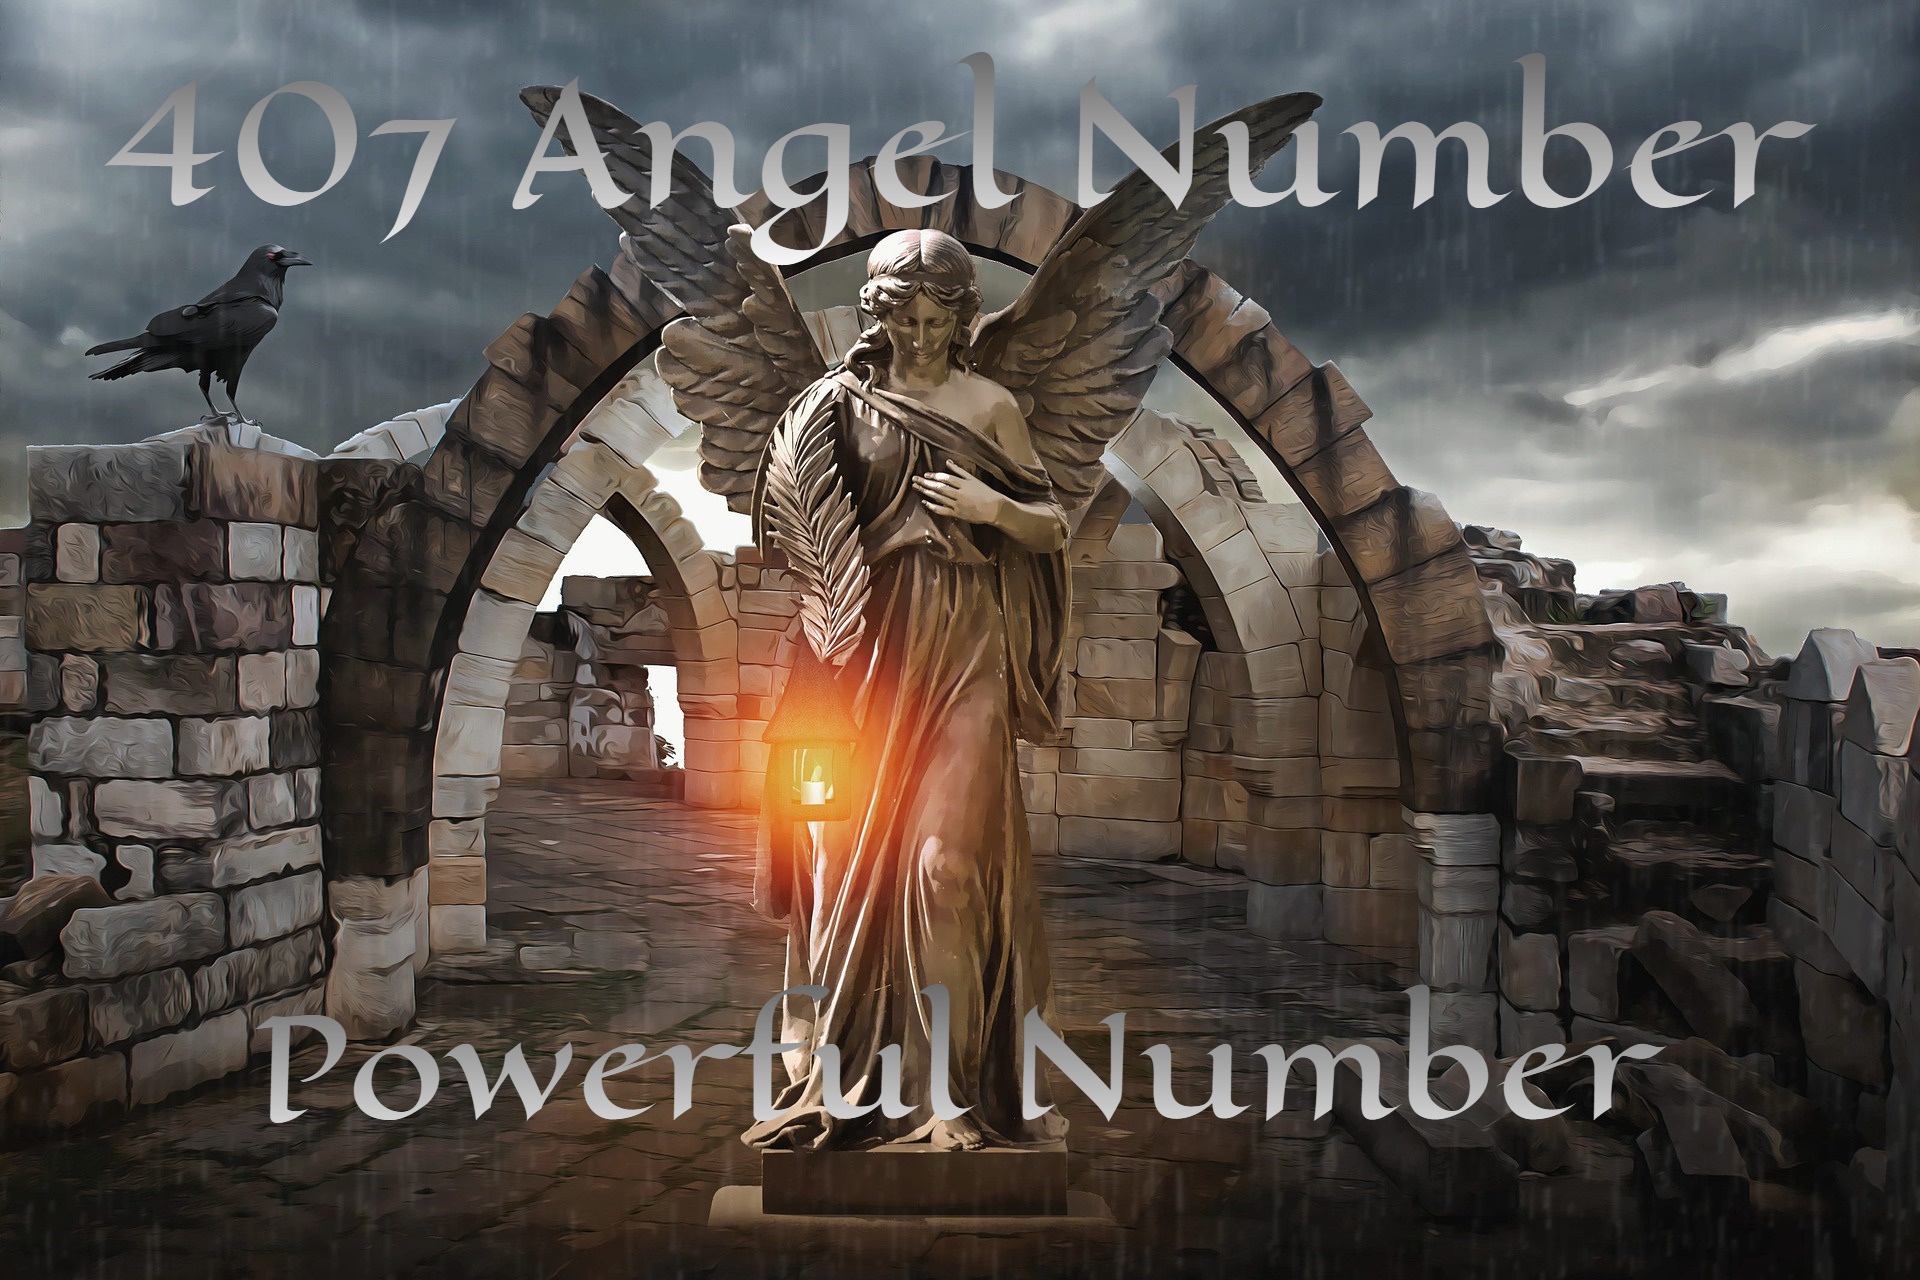 407 Angel Number - Powerful Number